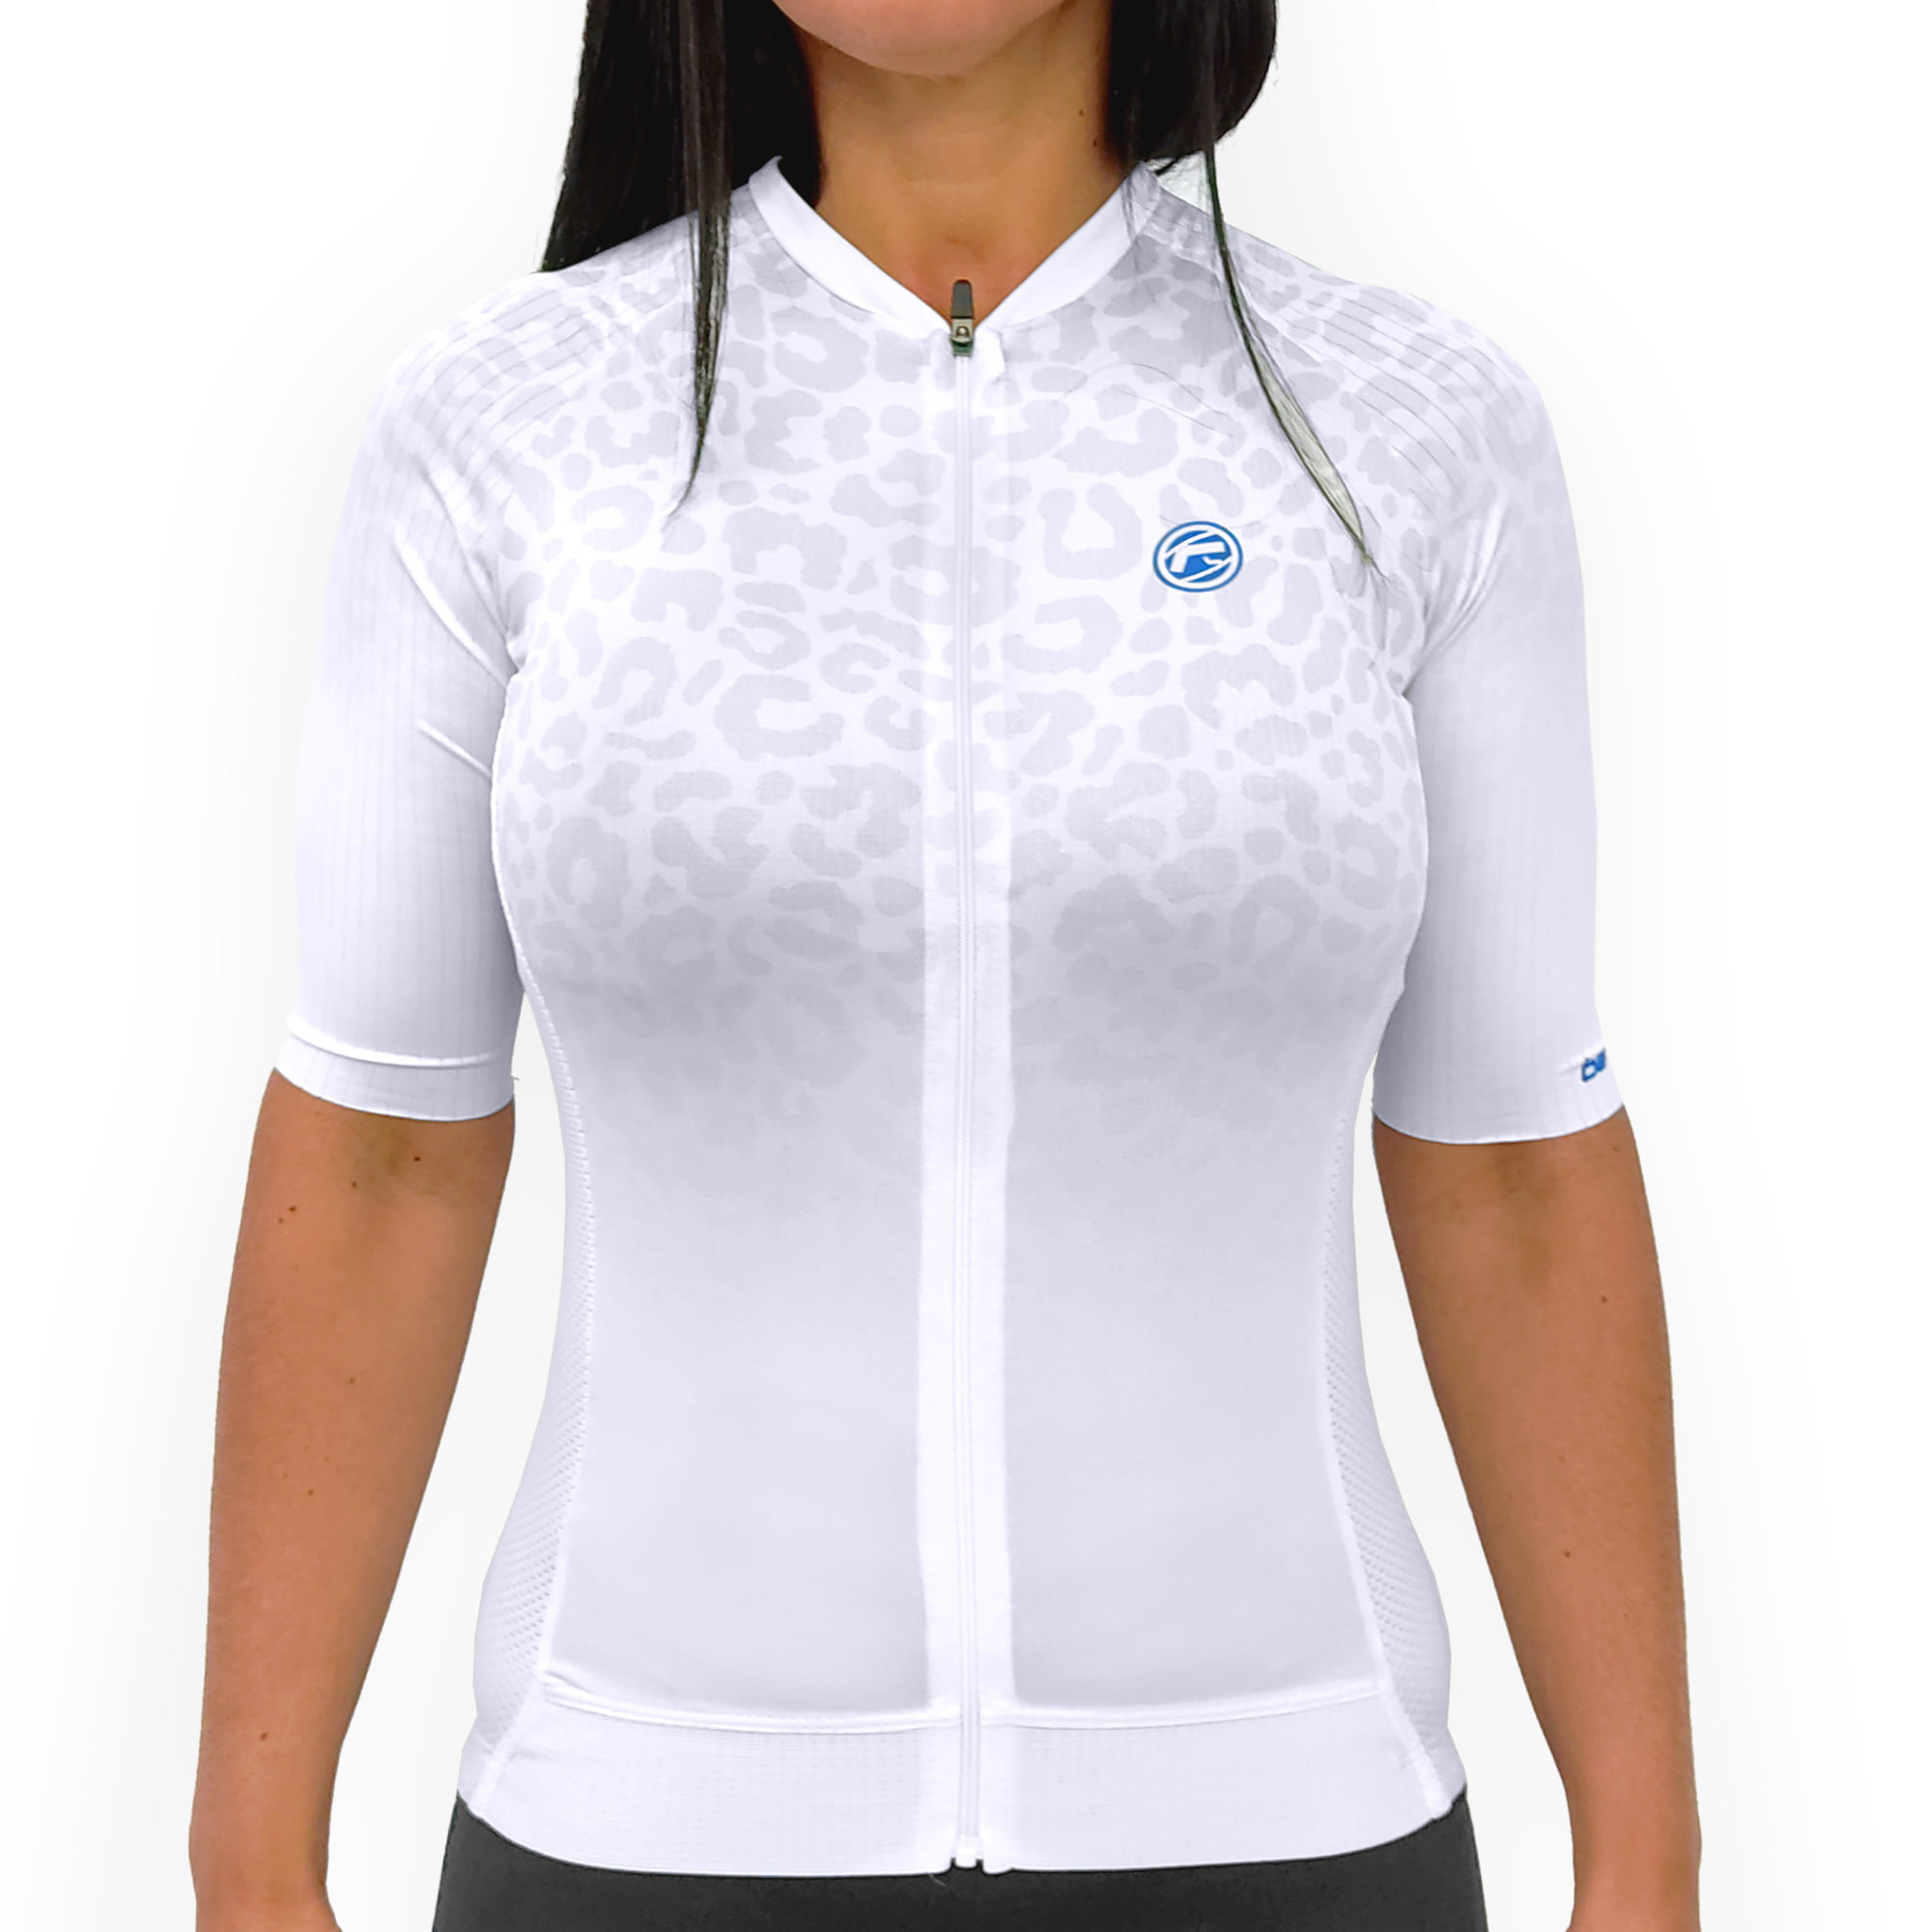 Camisa de Ciclismo Feminina Barbedo Couer Branca